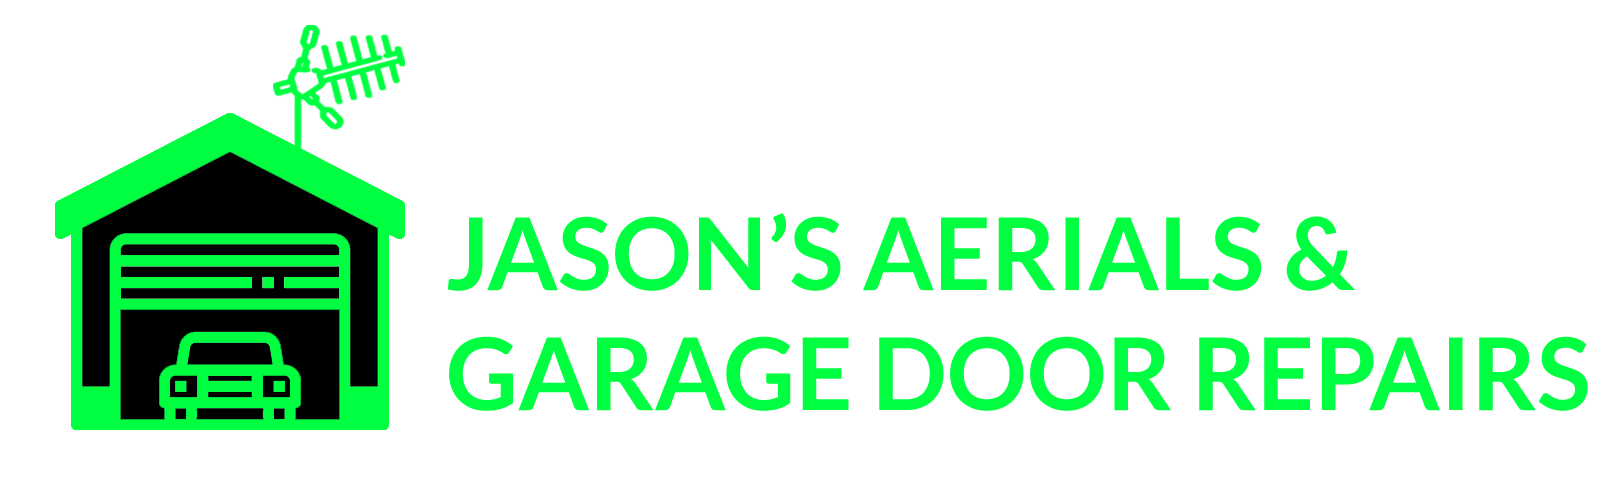 Jason aerials & garage doors logo beside text black